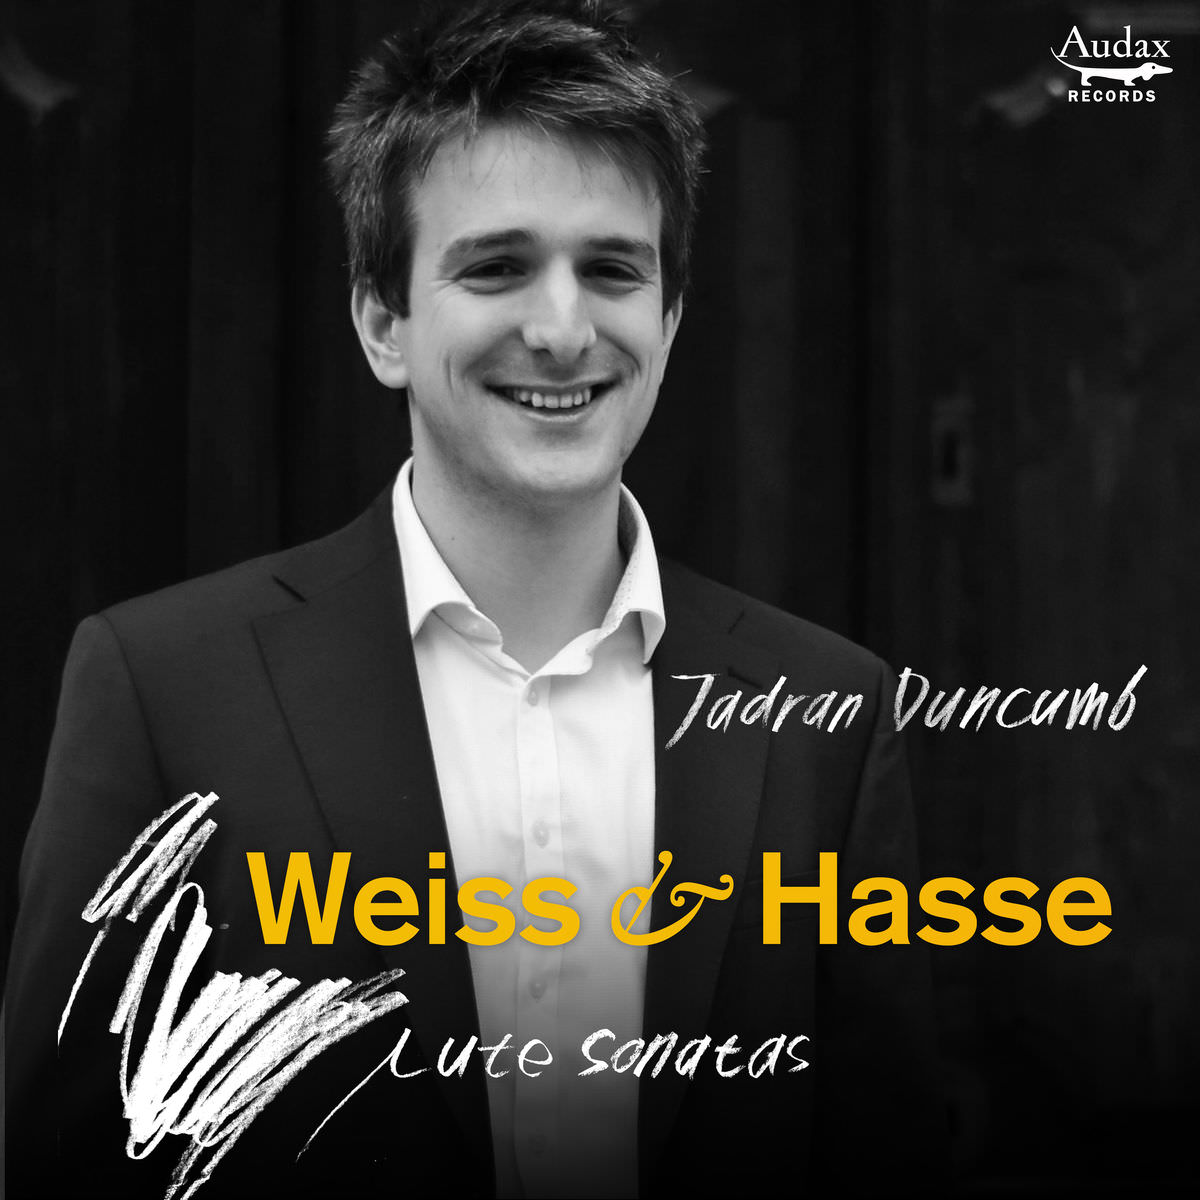 Jadran Duncumb – Weiss & Hasse: Lute Sonatas (2018) [FLAC 24bit/96kHz]